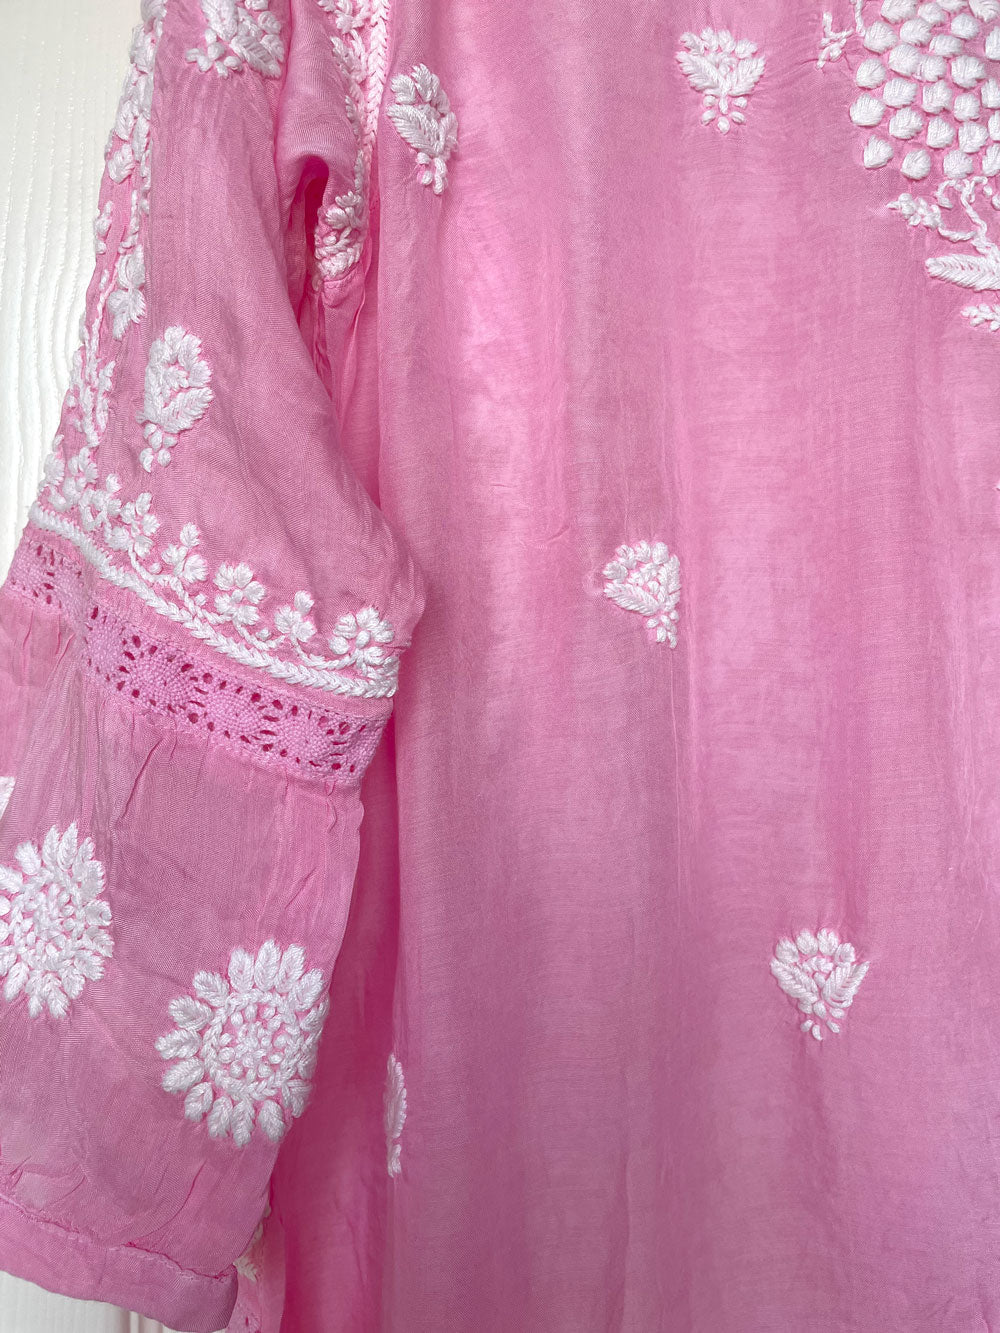 Women's Pink Lucknowi Hand Embroidered Muslin Silk Short Kurti Dress PinkPhulkari CaliforniaWomen's Pink Lucknowi Hand Embroidered Muslin Silk Short Kurti Dress PinkPhulkari California